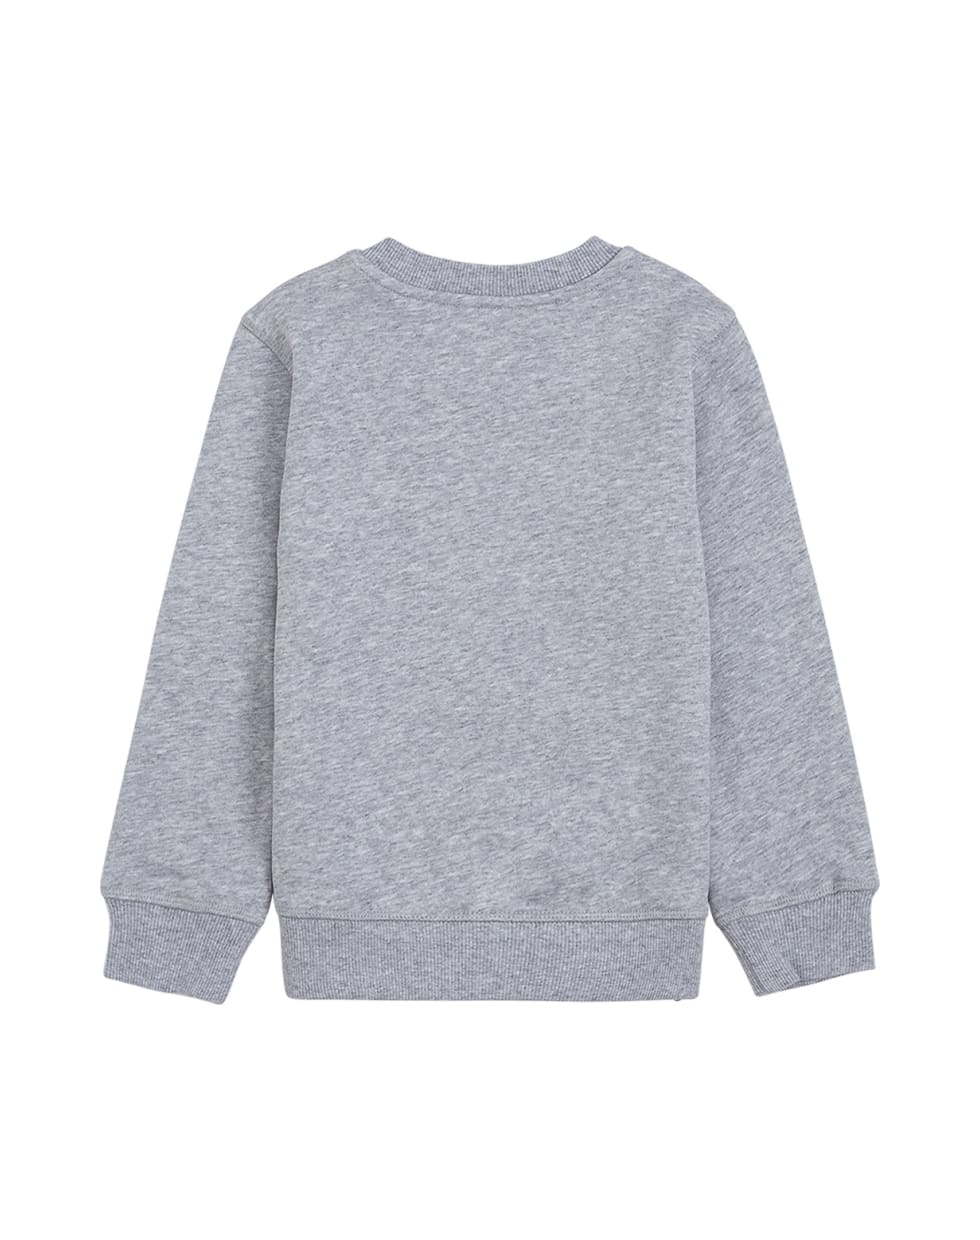 Kenzo Kids Grey Cotton Sweatshirt With Tiger Print - Grigio